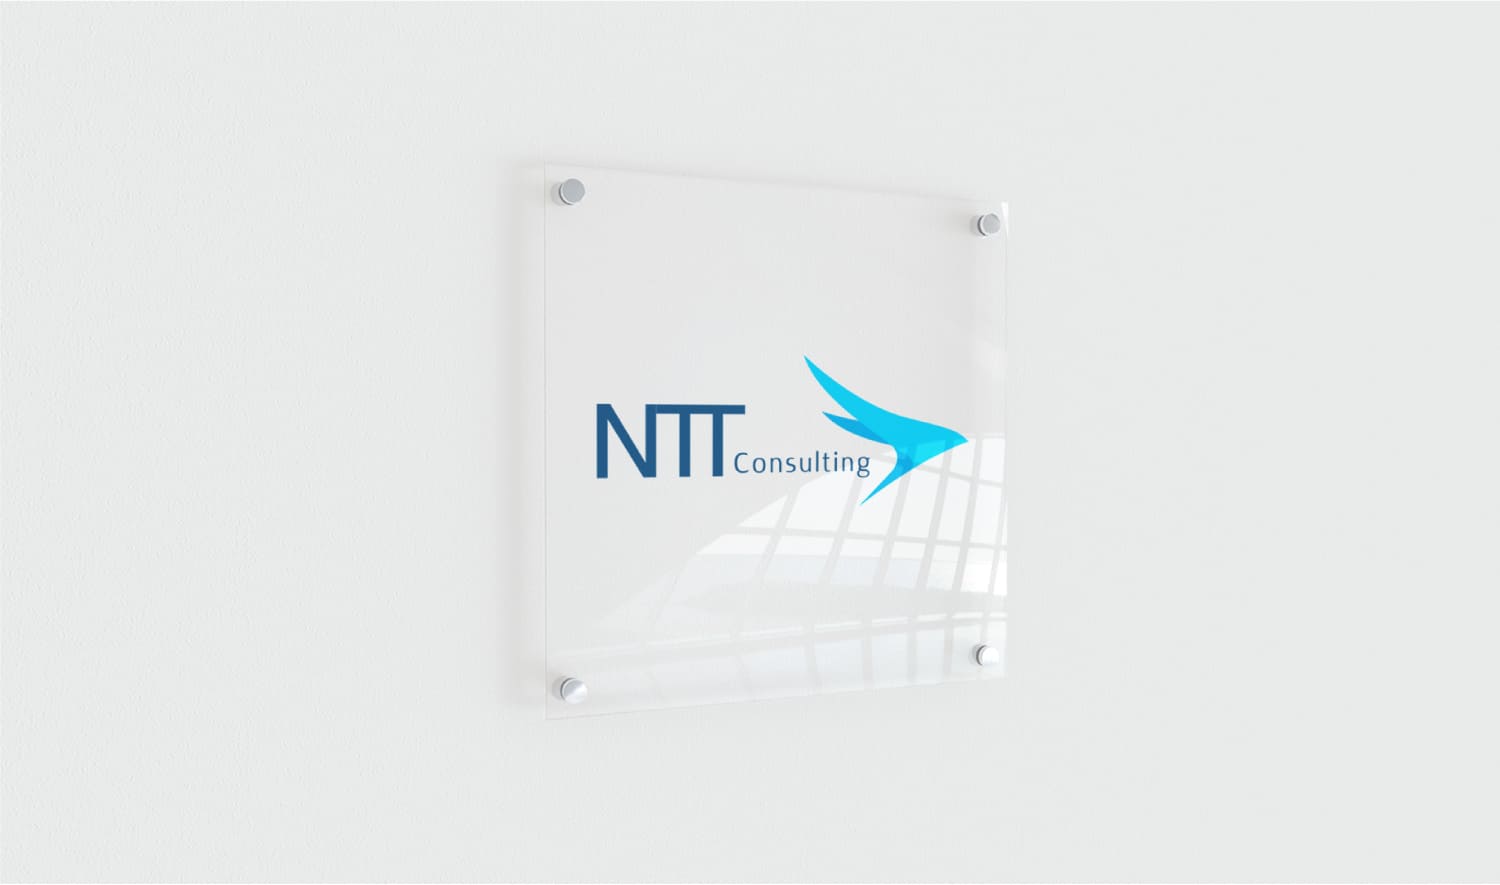 NTT Consulting2